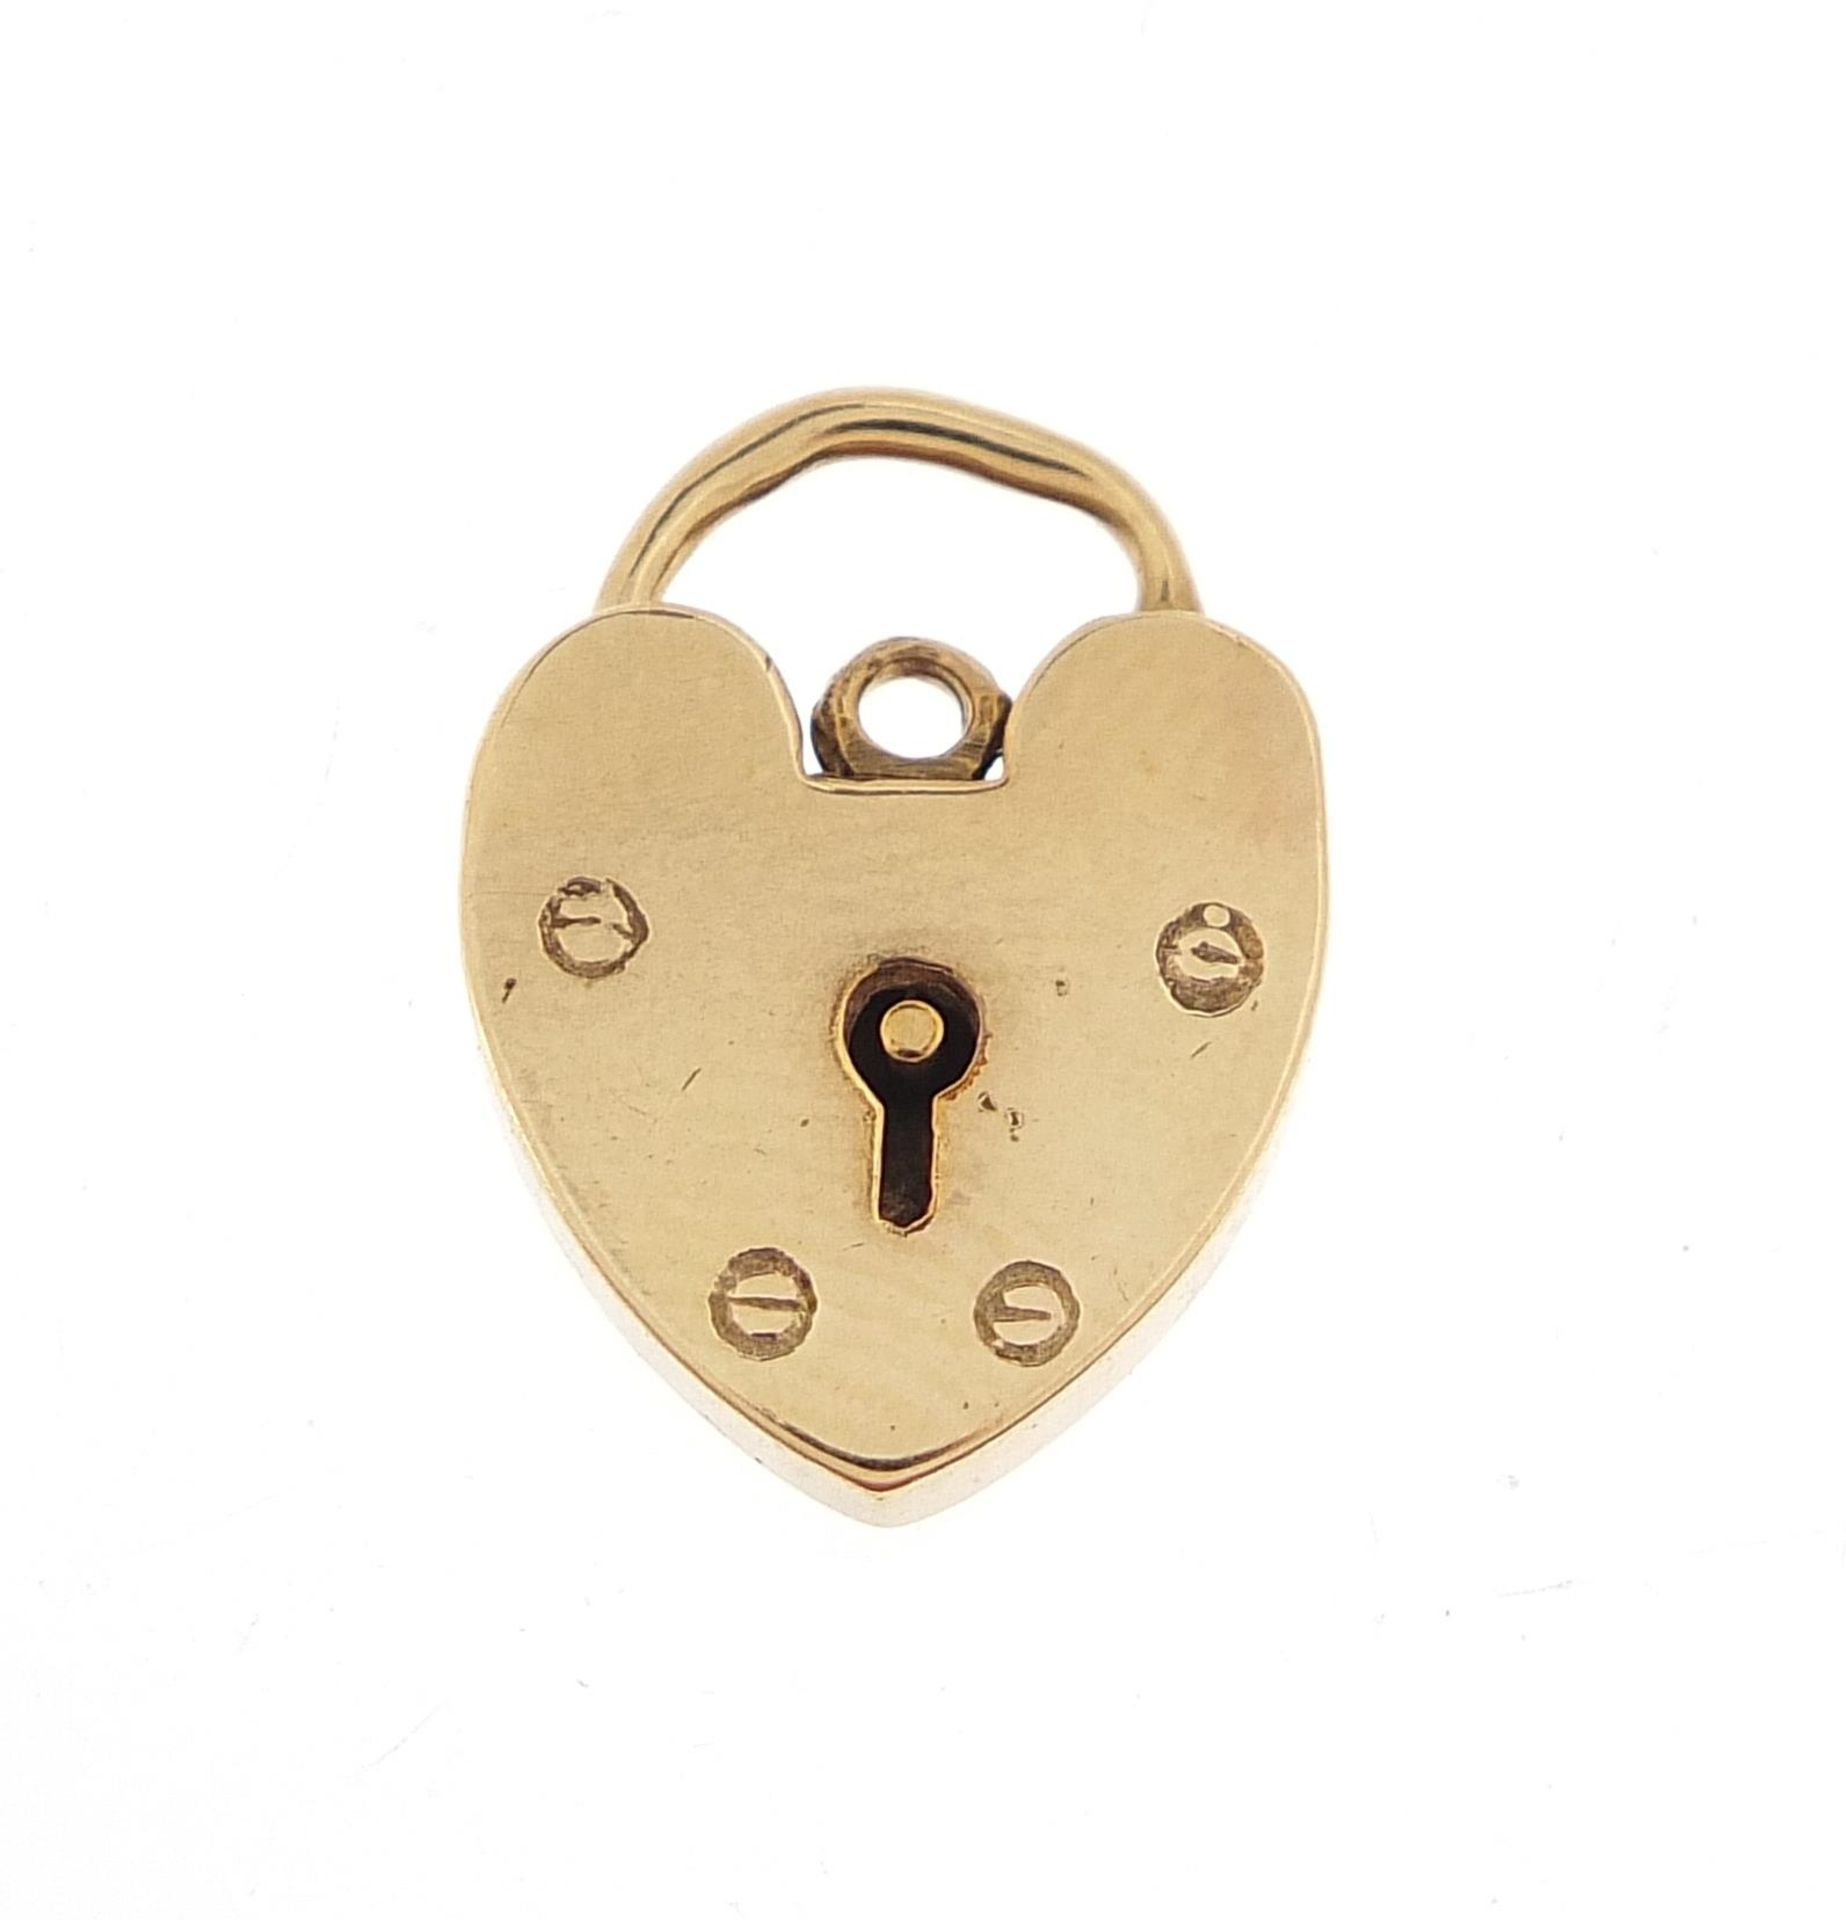 9ct gold love heart padlock, 2cm high, 2.7g